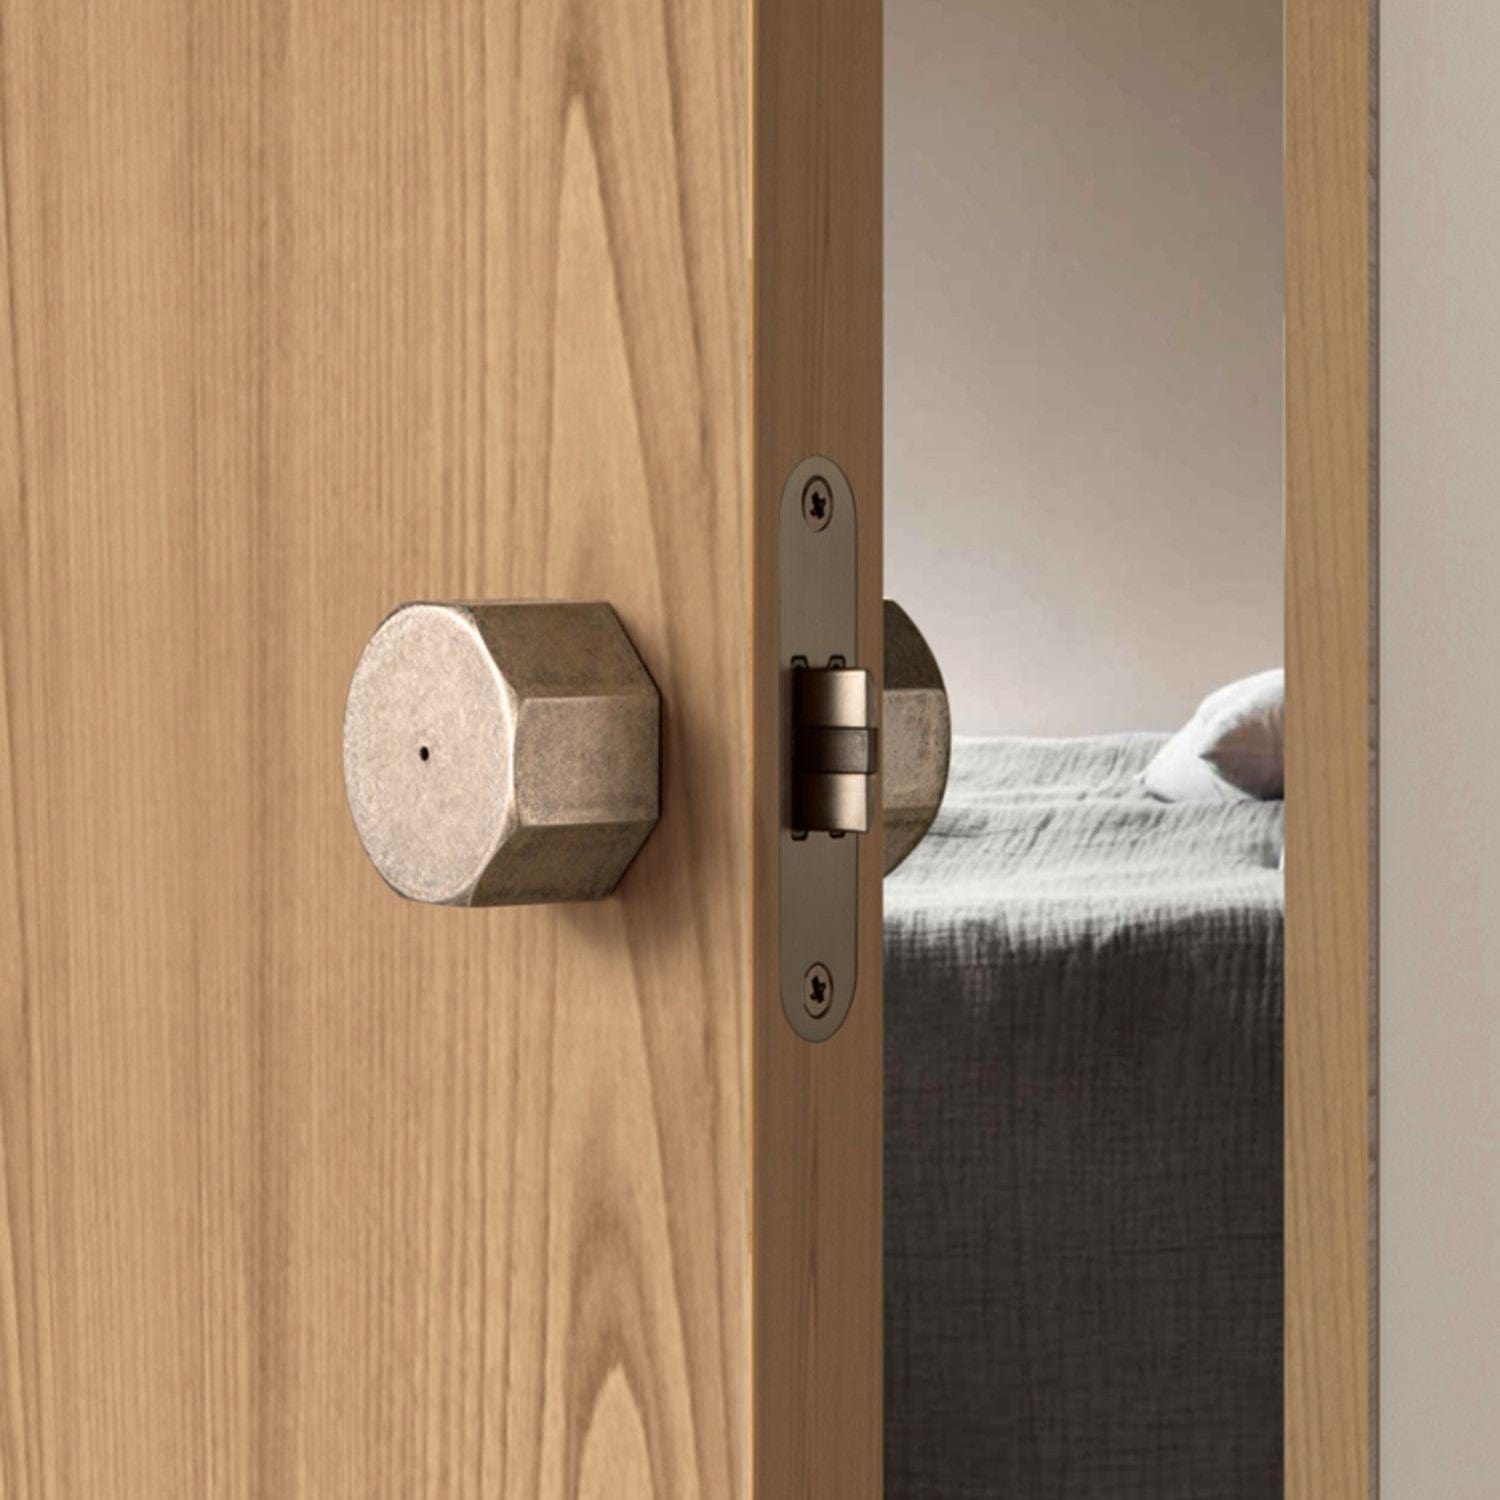 Goo-Ki Octagonal Antique Silver Door Lock Security Rotatable Interior Keyless Door Lock